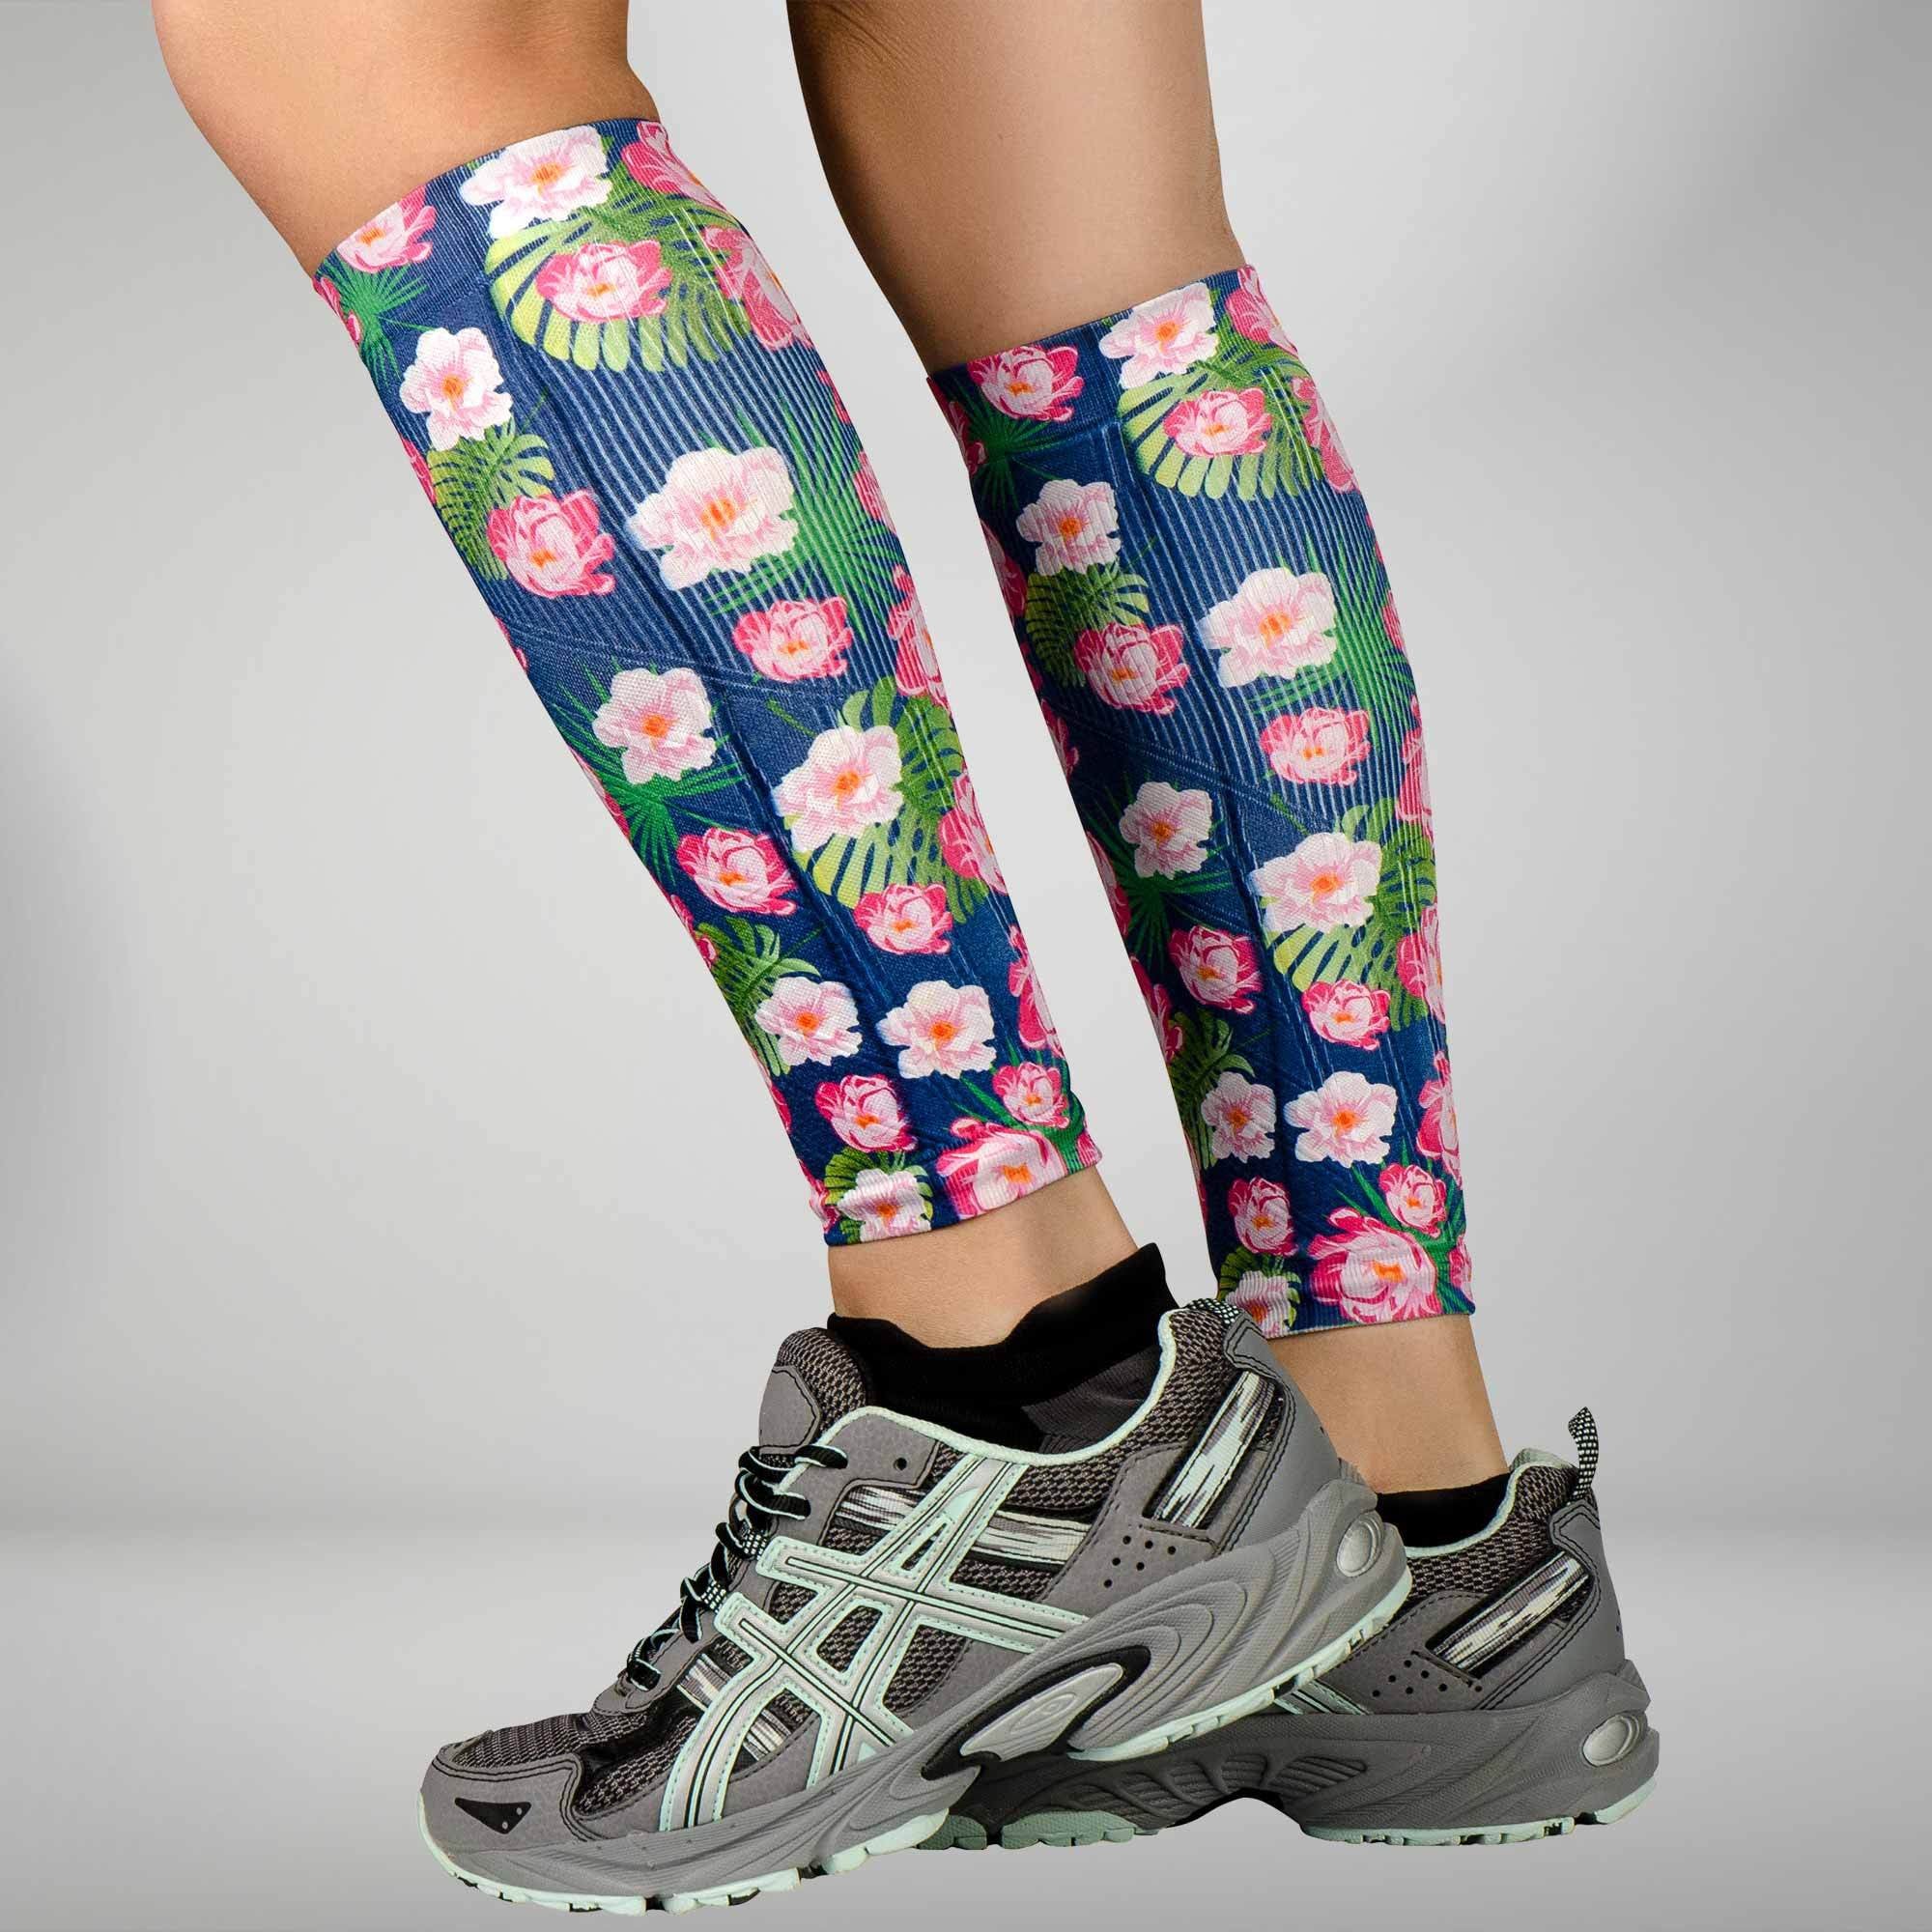 Floral Compression Leg Sleeves Calf Sleeves Marathons Zensah